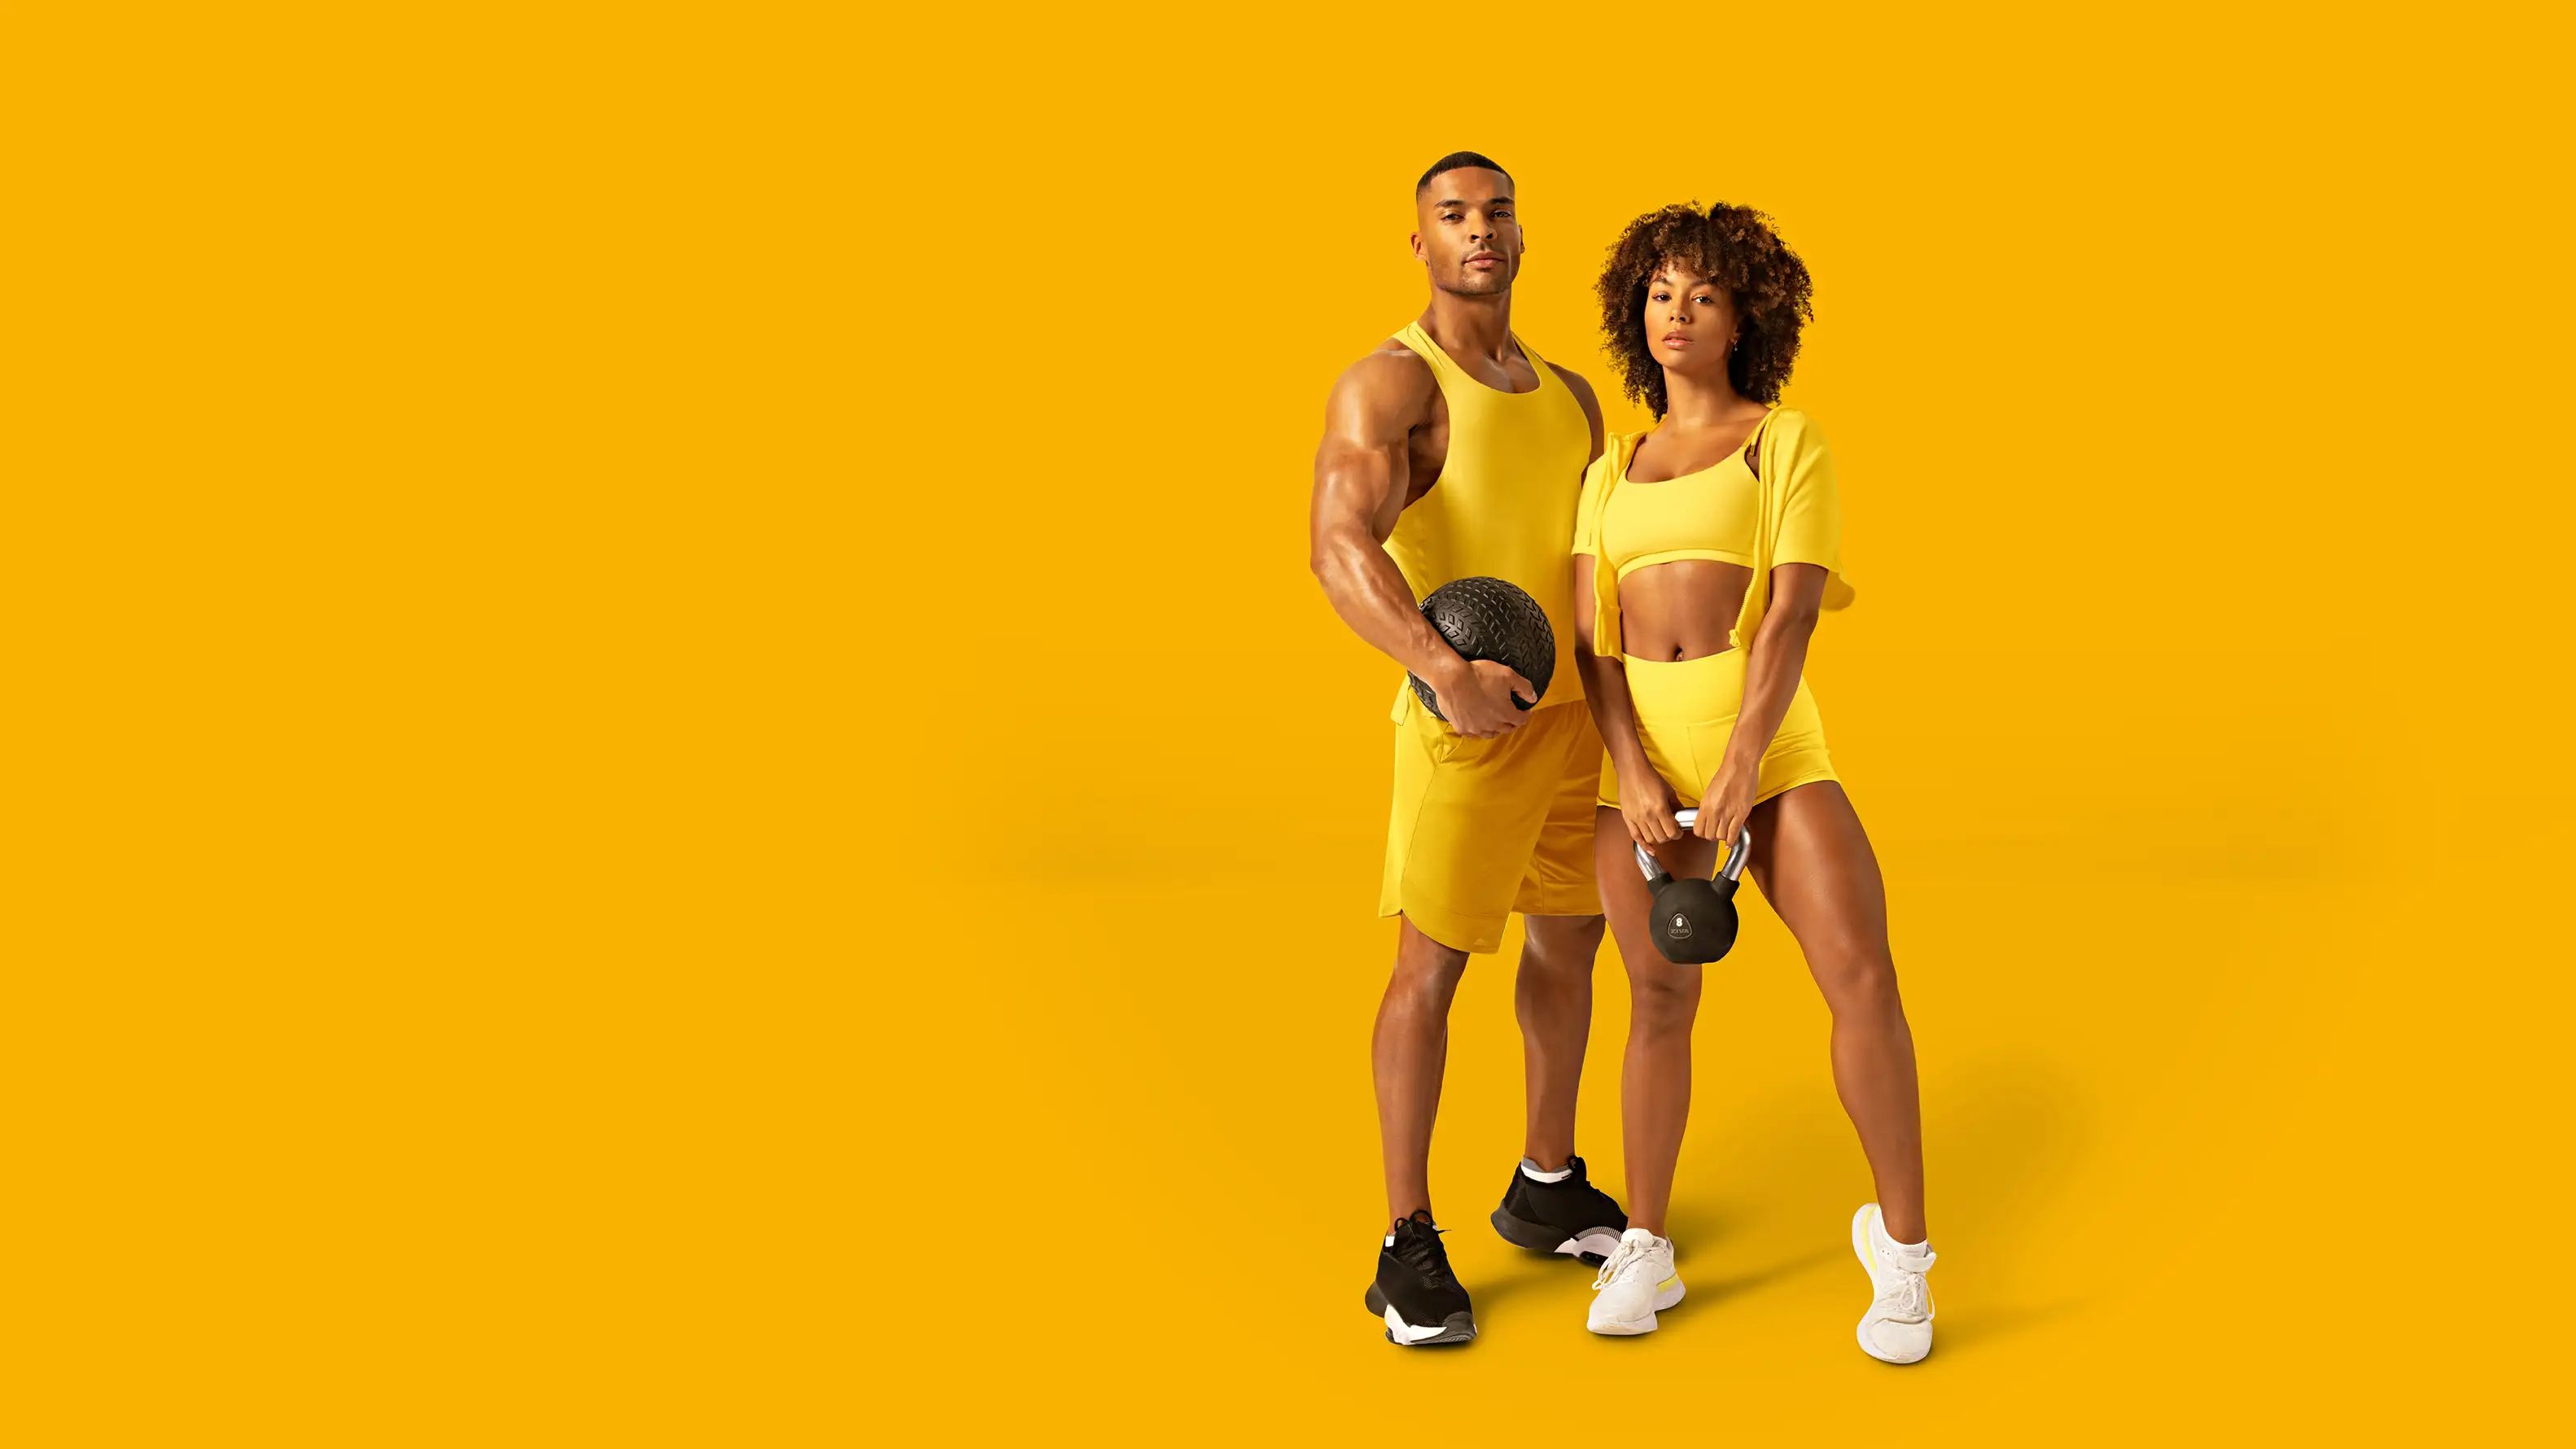 Atleta con balón medicinal y atleta con kettlebell en ropa deportiva amarilla